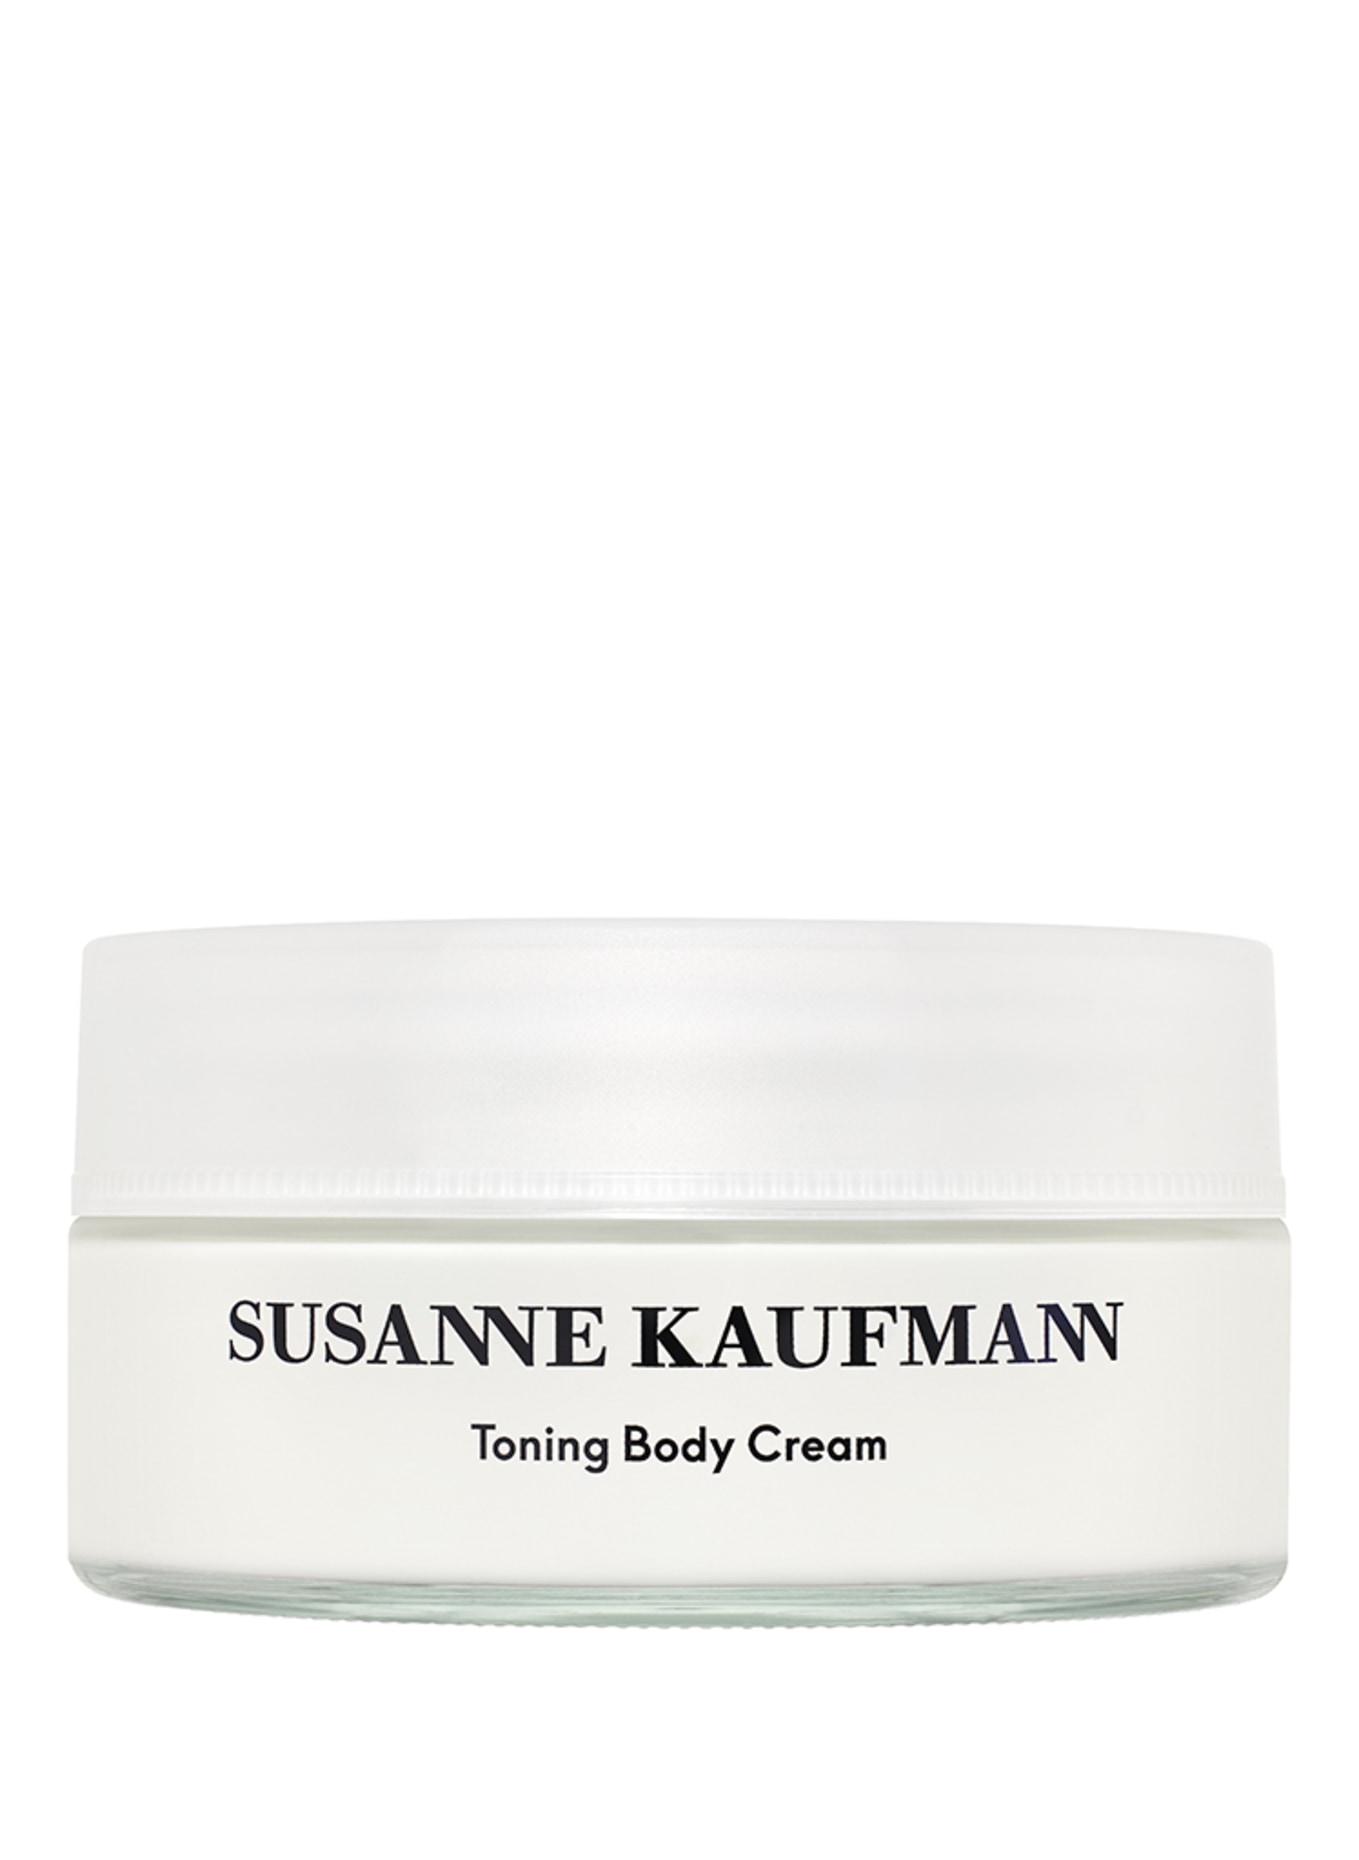 SUSANNE KAUFMANN TONING BODY CREAM (Bild 1)